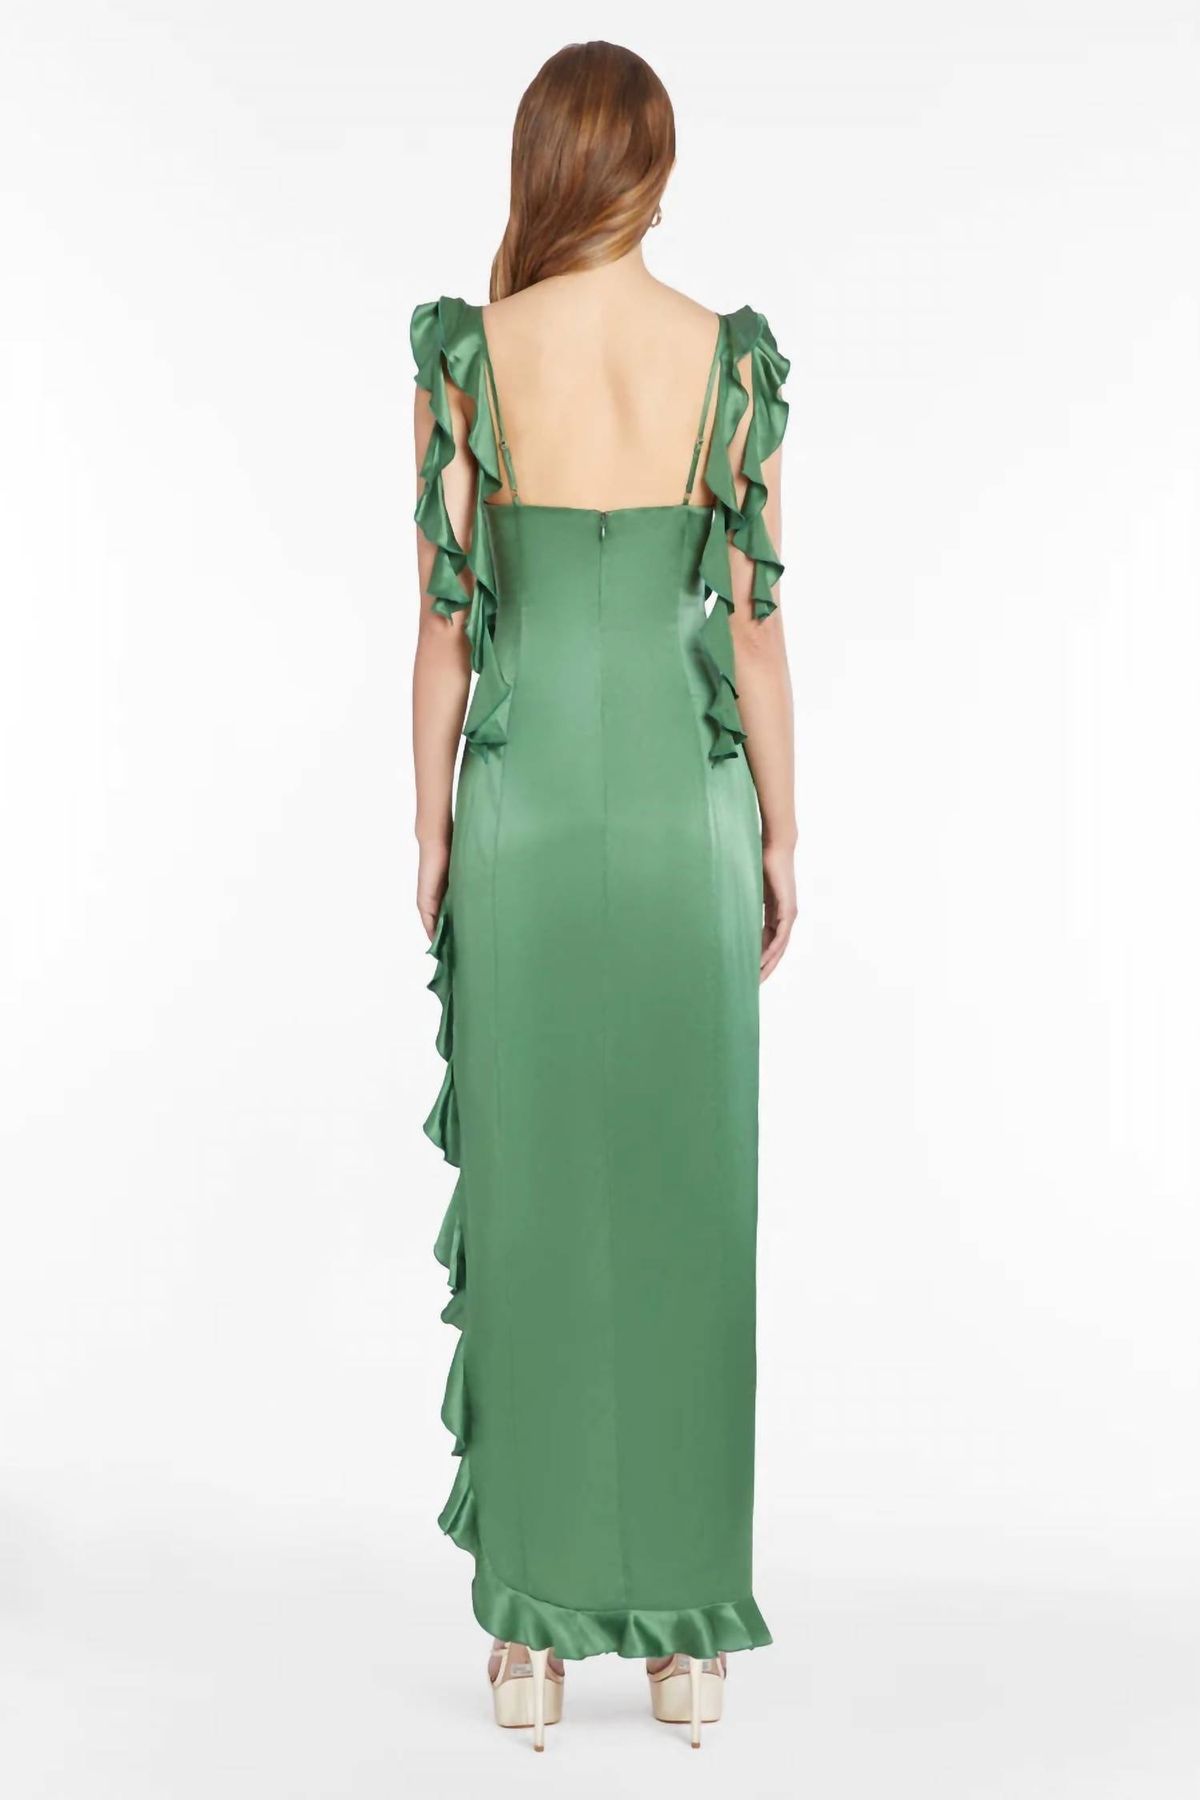 Style 1-1055180749-3855 Amanda Uprichard Size XS Satin Green Side Slit Dress on Queenly